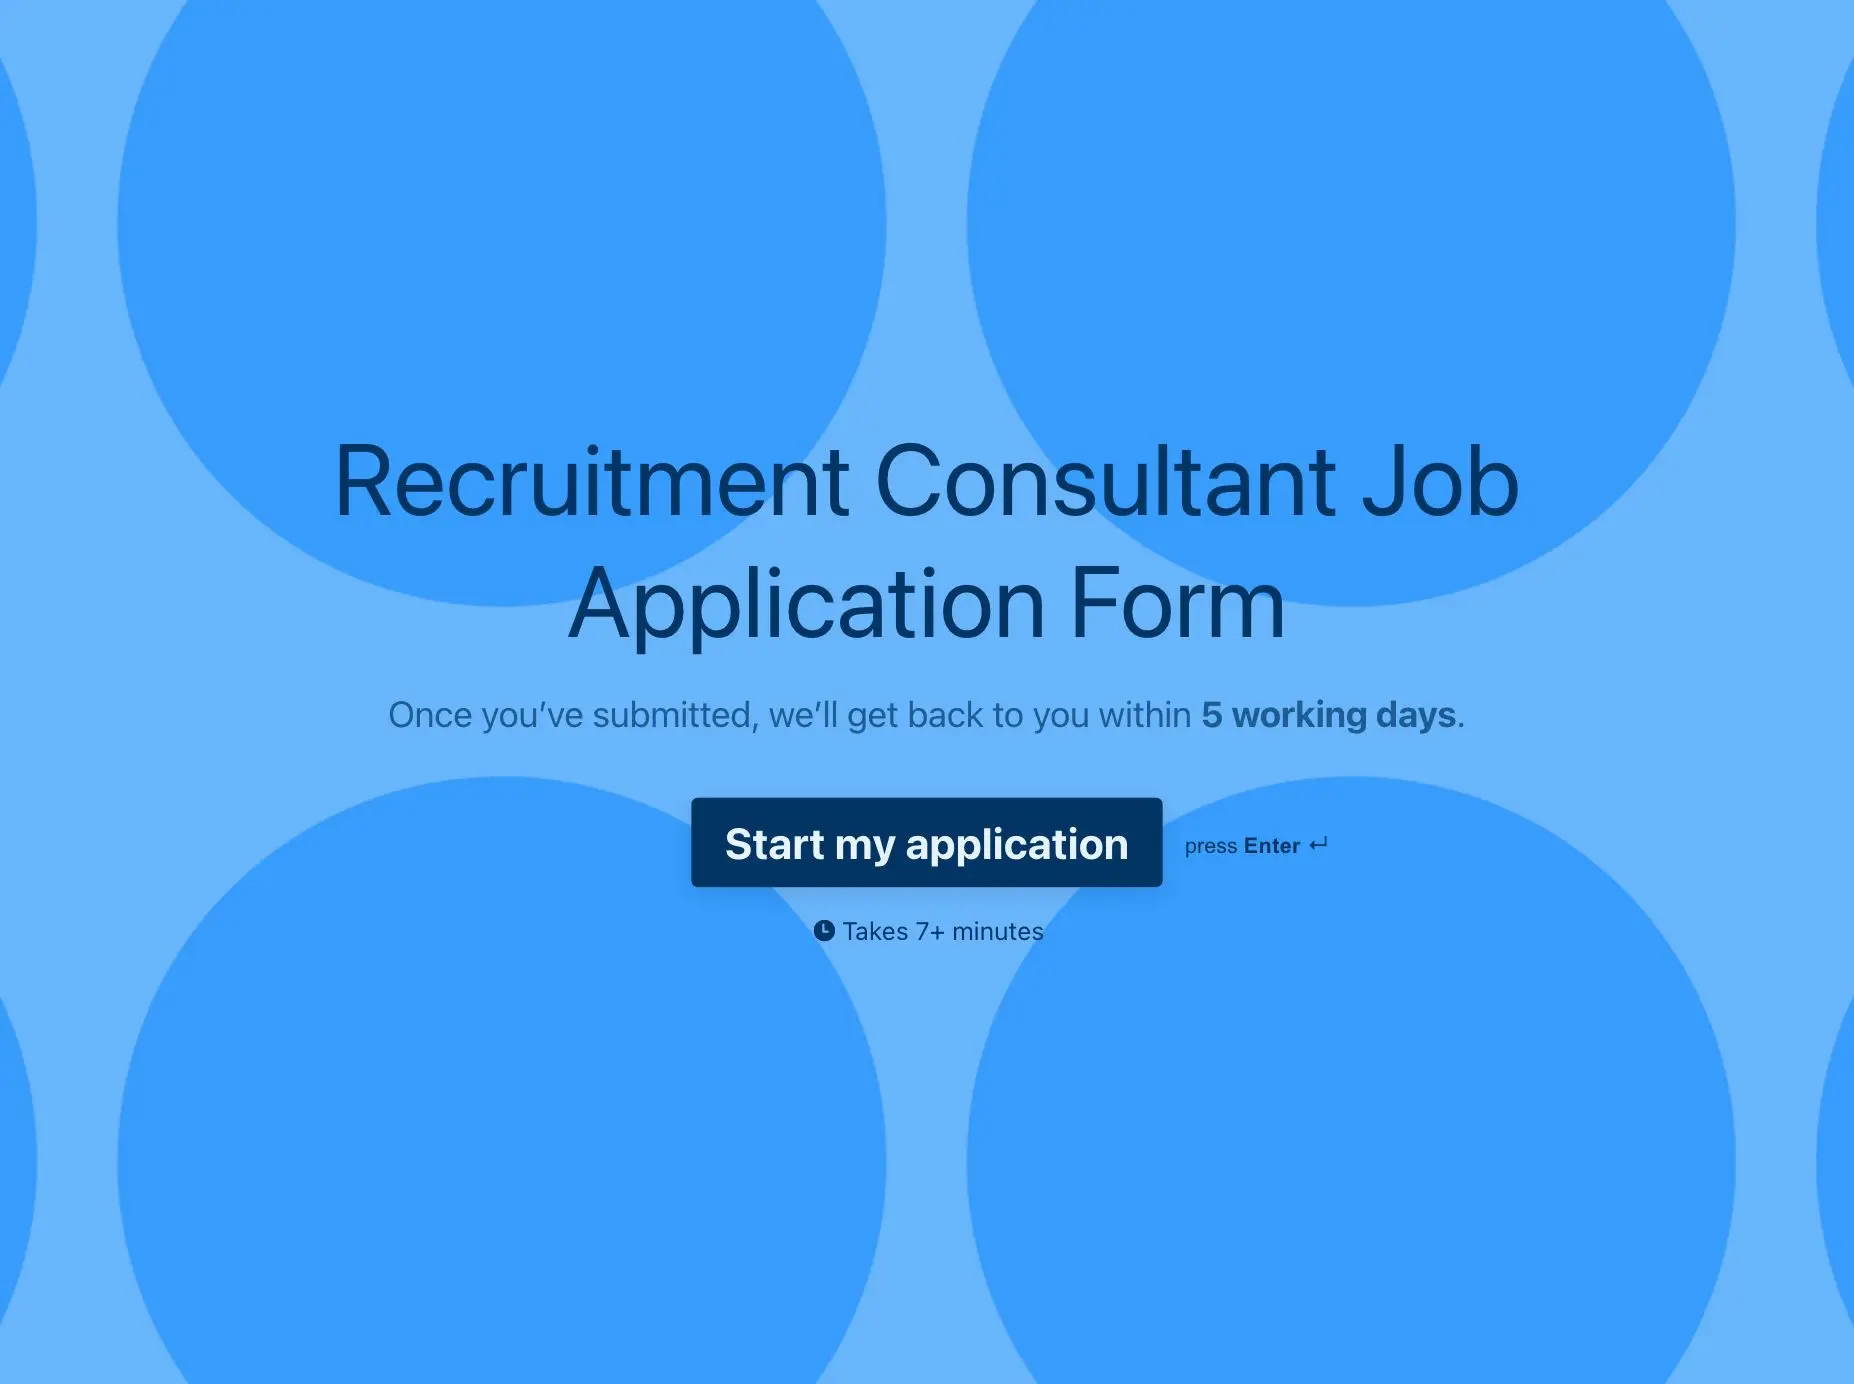 Recruitment Consultant Job Application Form Template Hero